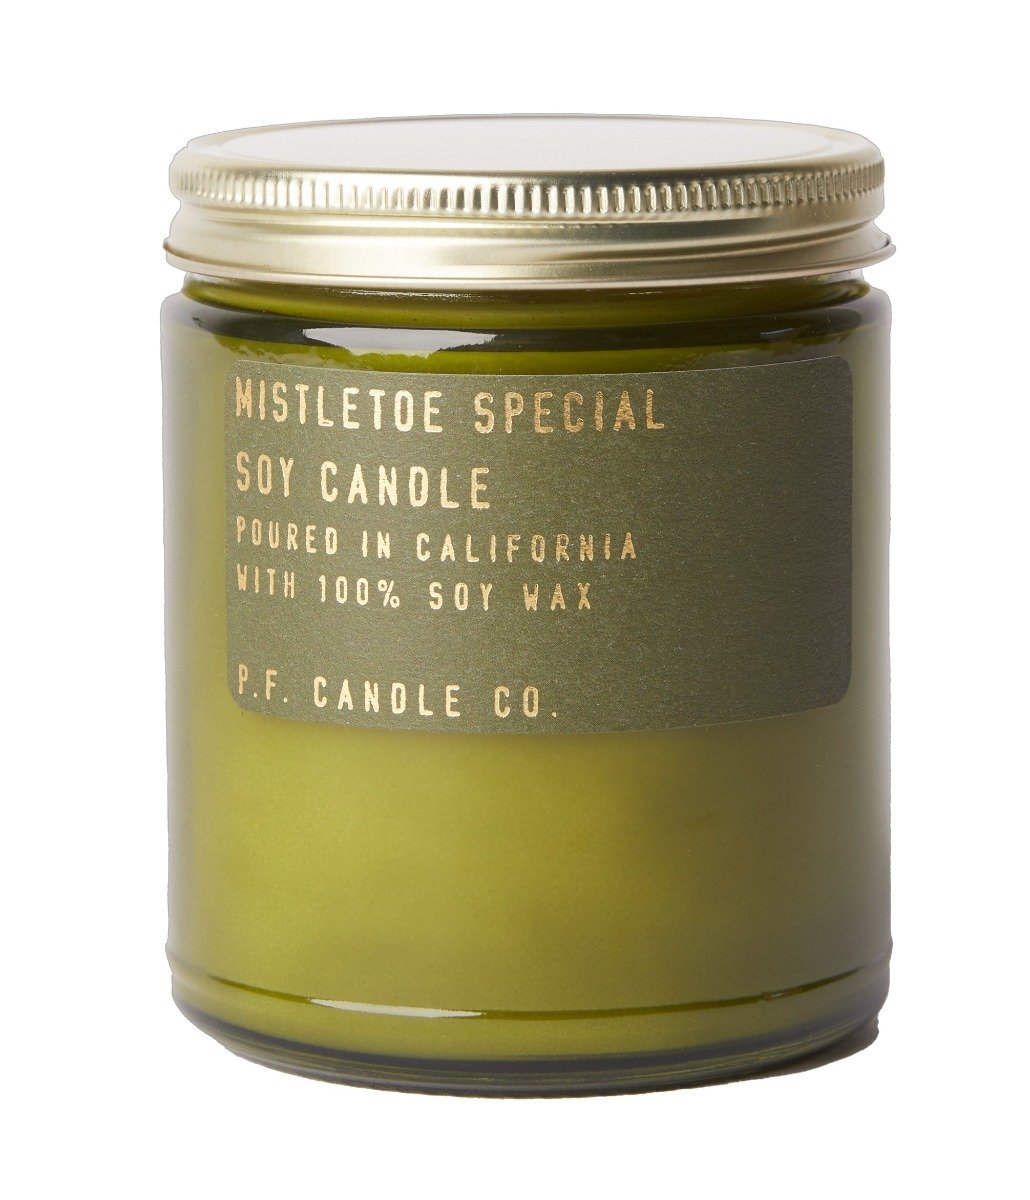  Mistletoe Candle